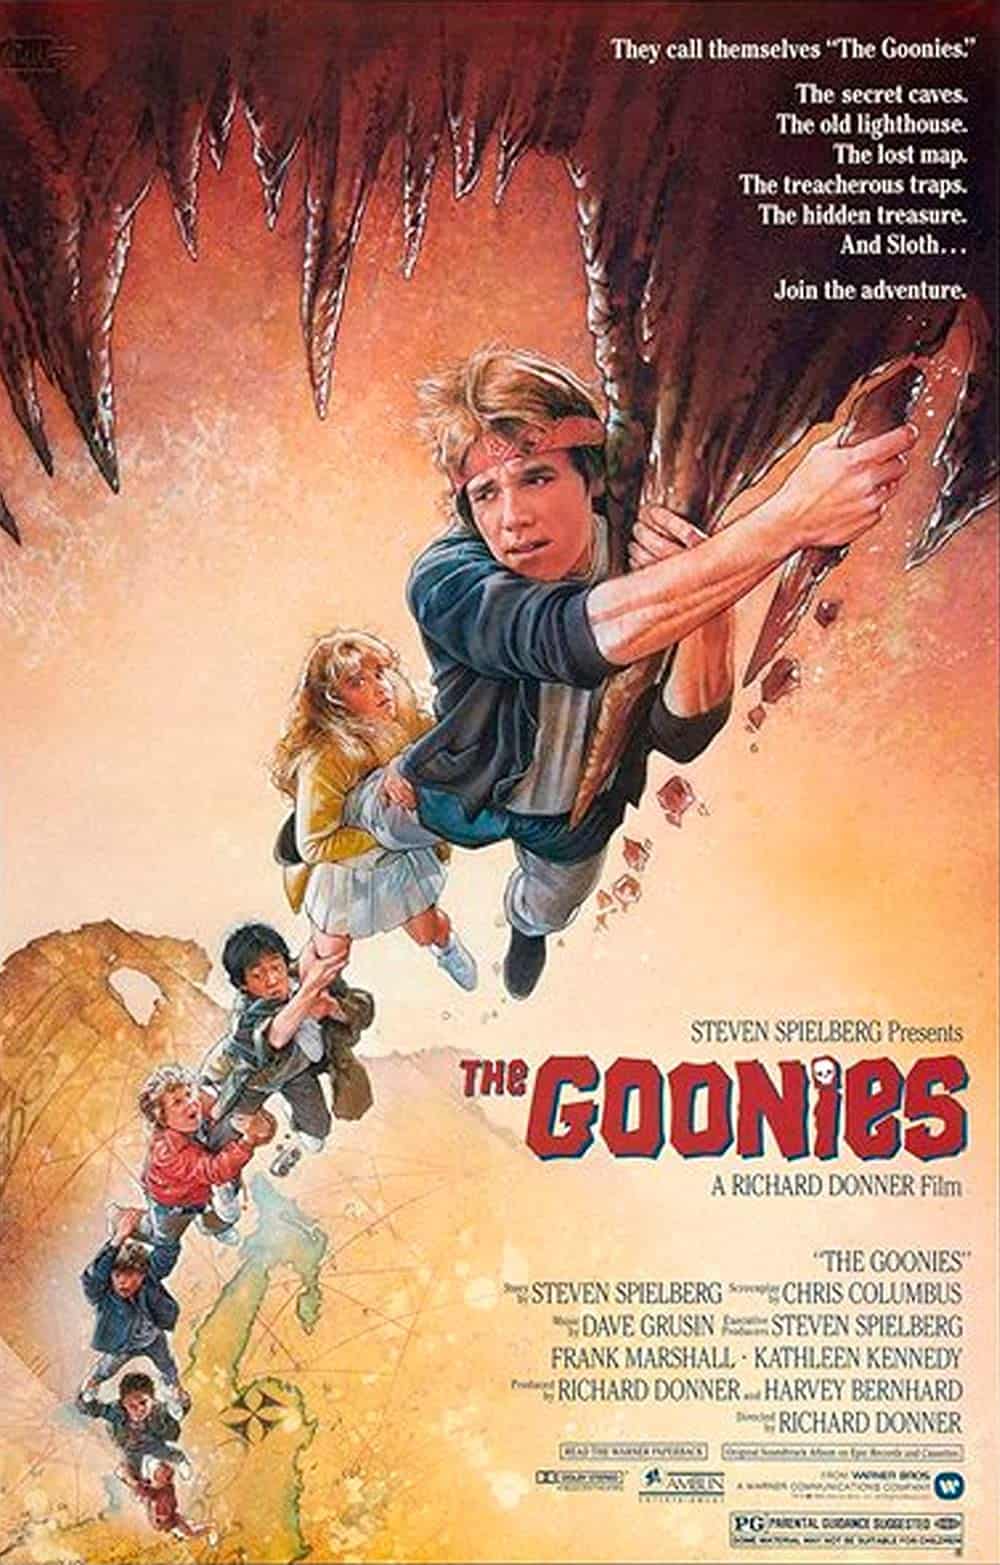 National Treasure similar movies The Goonies (1985)